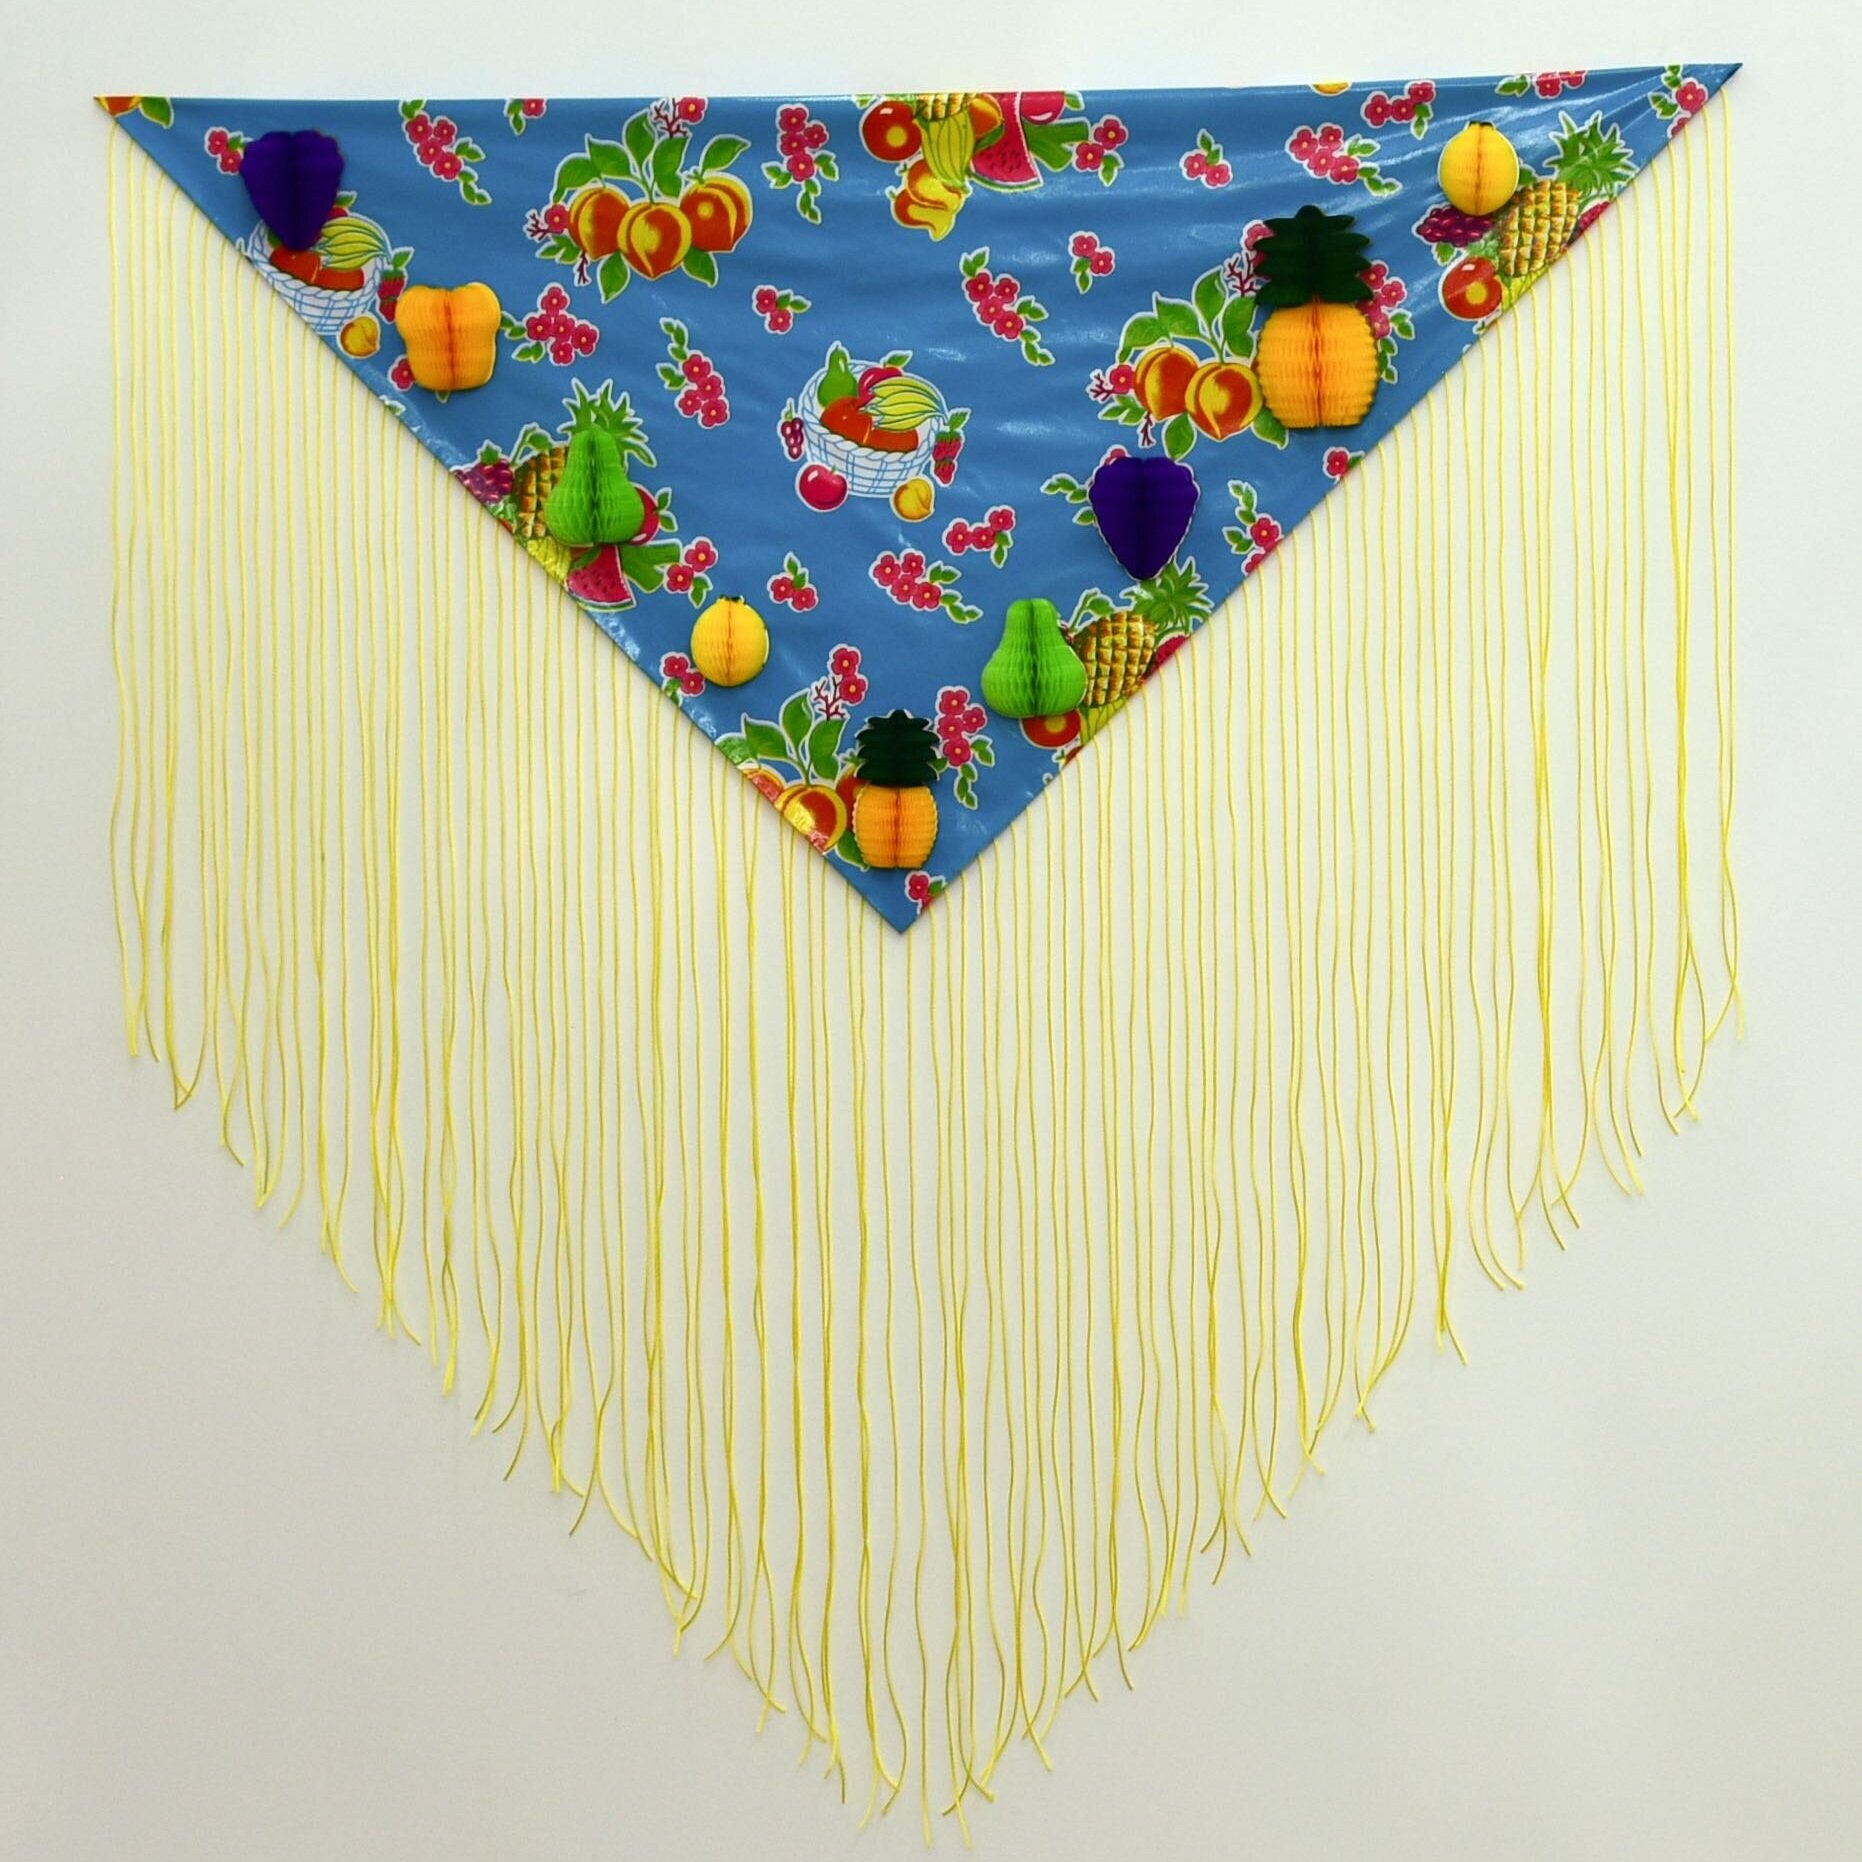 Carolina Magis Weinberg, Mantel de Manila, 2020 Plastic tablecloth made in China, polyester thread made in China, papel de China fruits made in Mexico 